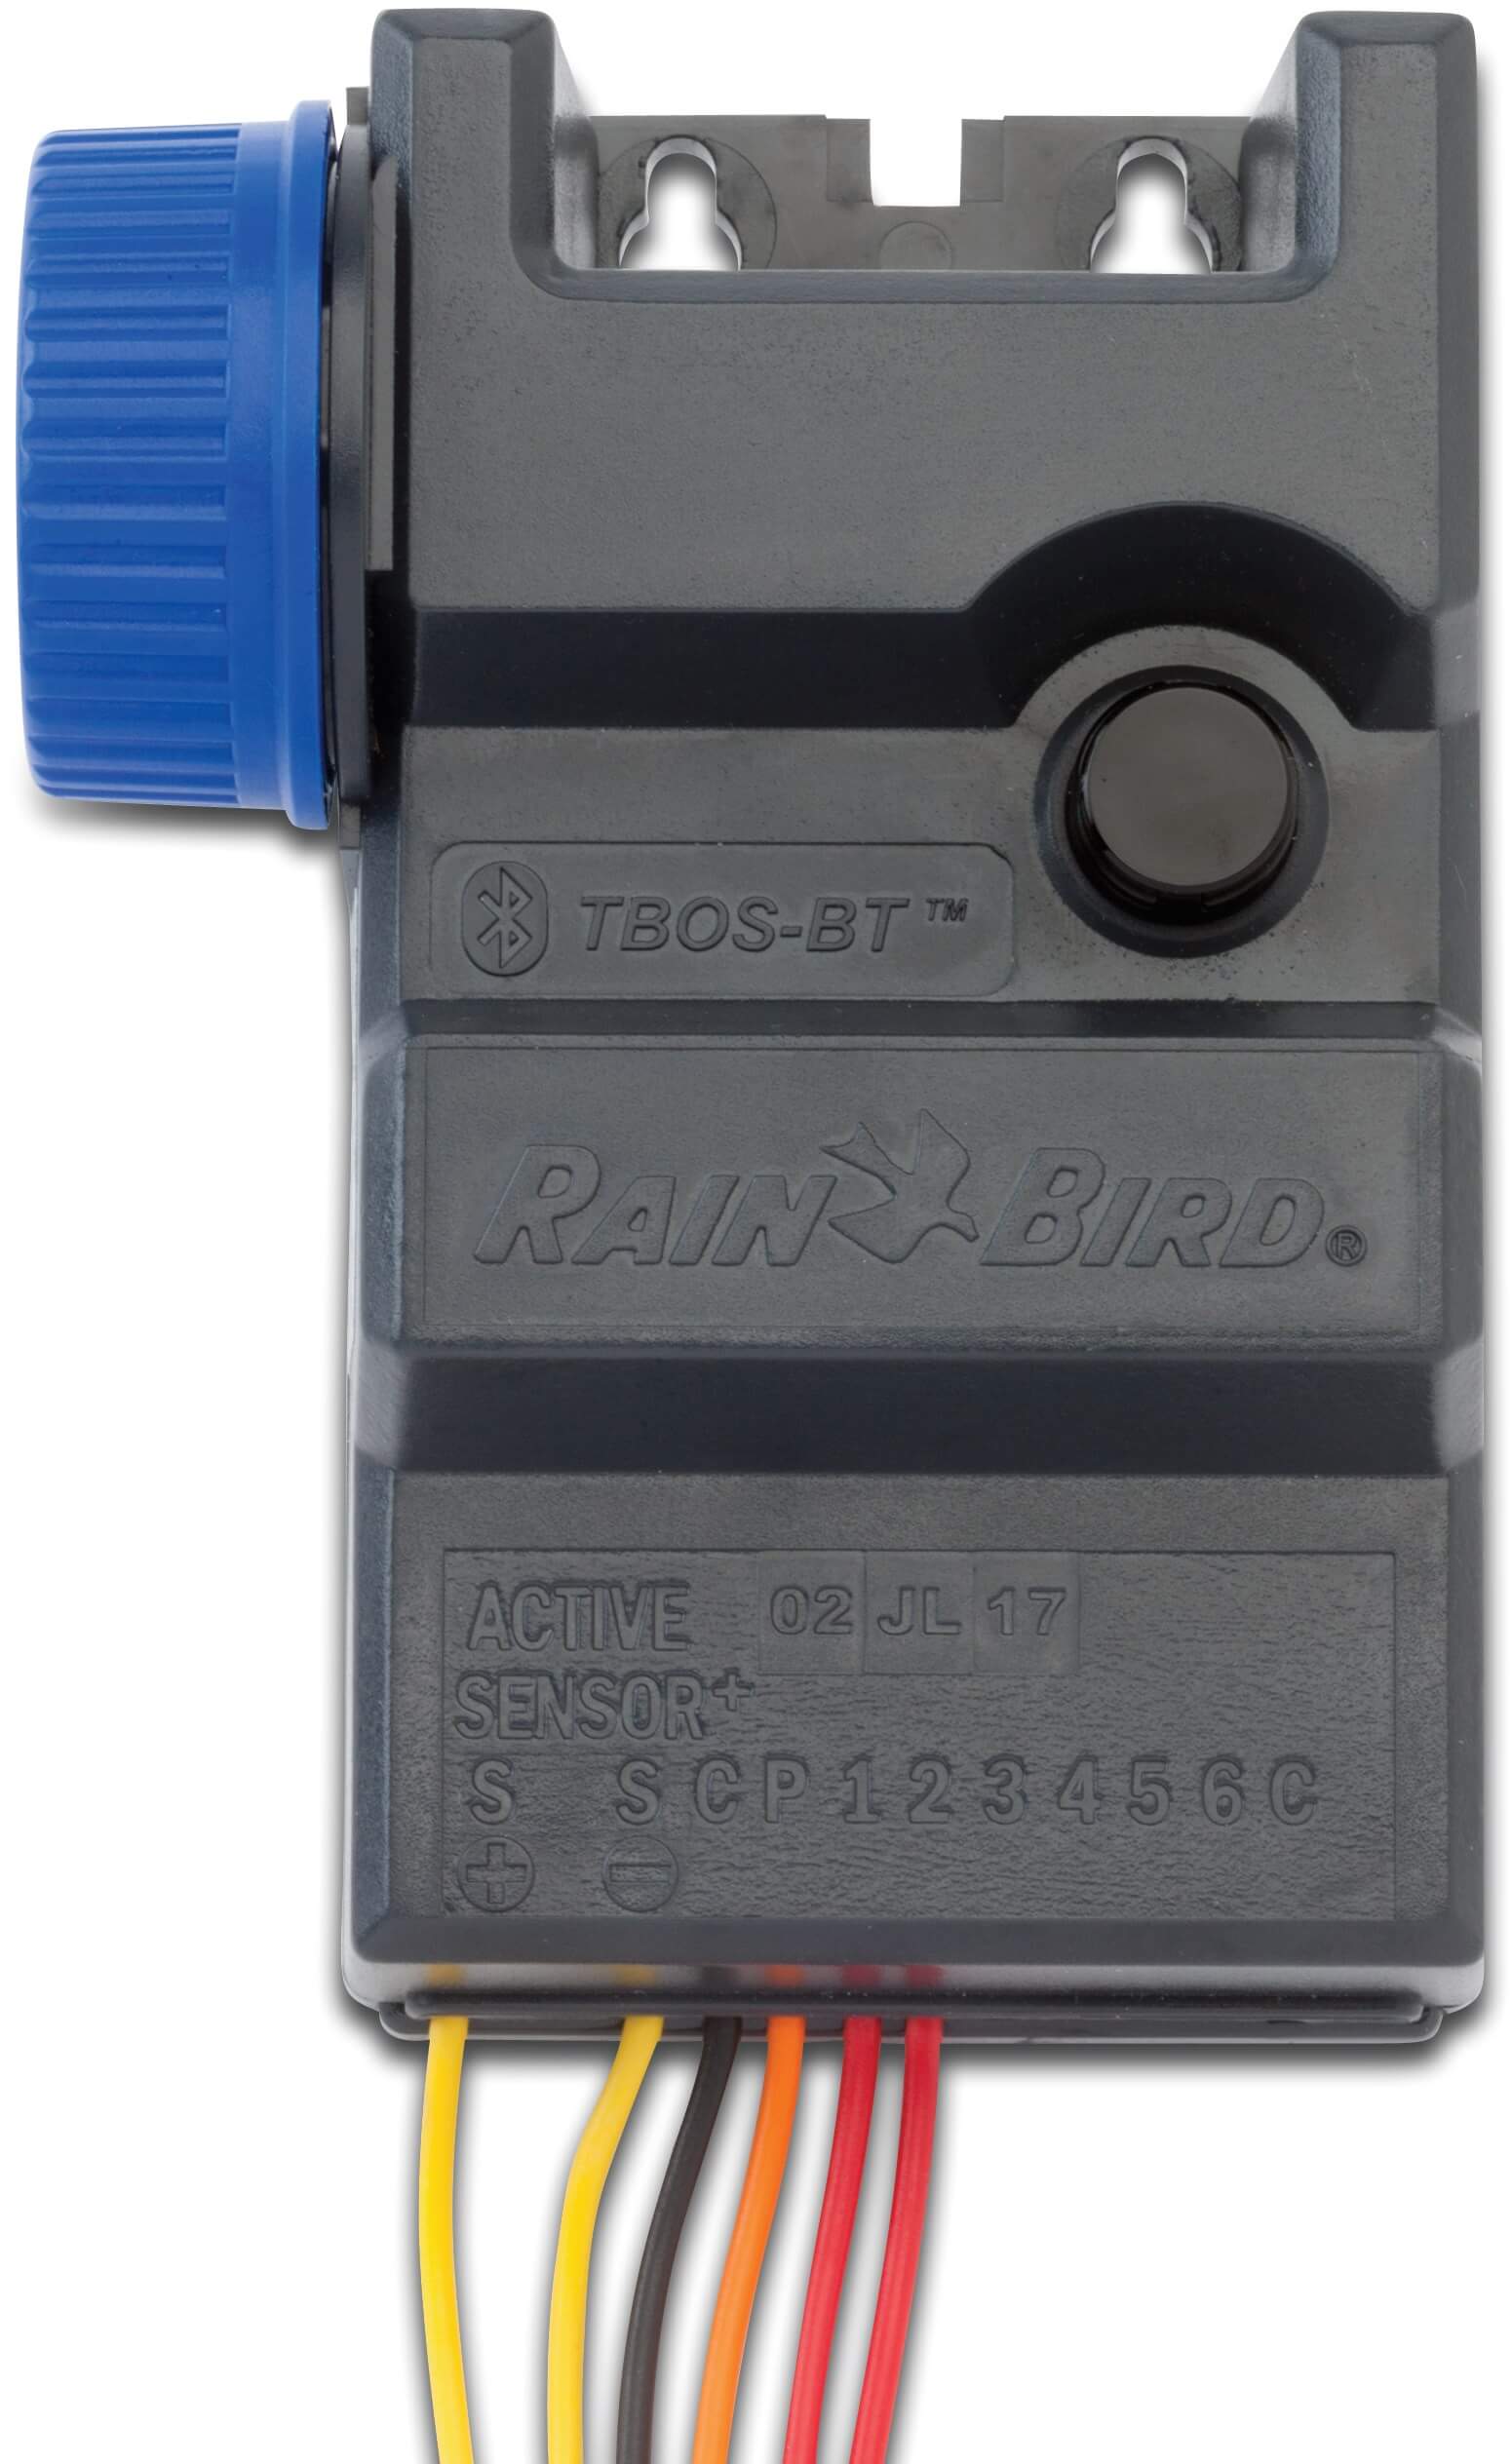 Rain Bird Bluetooth besturingsmodule, TBOSBT-LT